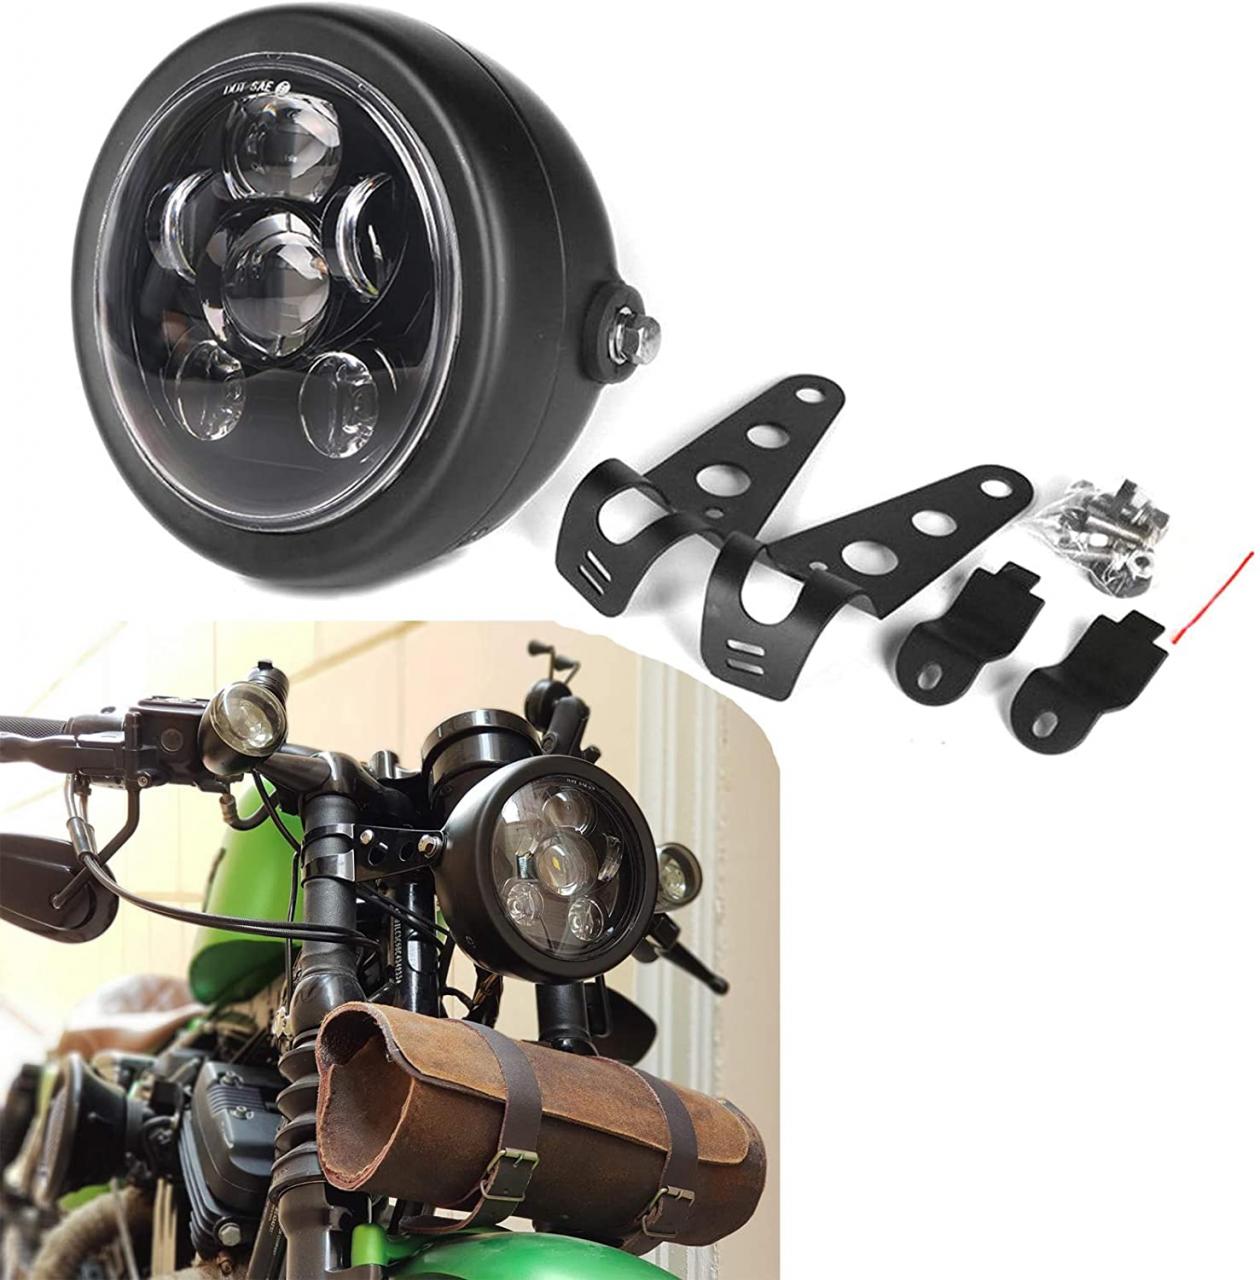 Buy HOZAN 5.75 5-3/4inch Black LED Motorcycle Headlight with Headlight  Housing for Honda Shadow Kawasaki Suzuki Motorbikes Metric bikes Cruisers  Choppers Online in Turkey. B071Z6JQCF